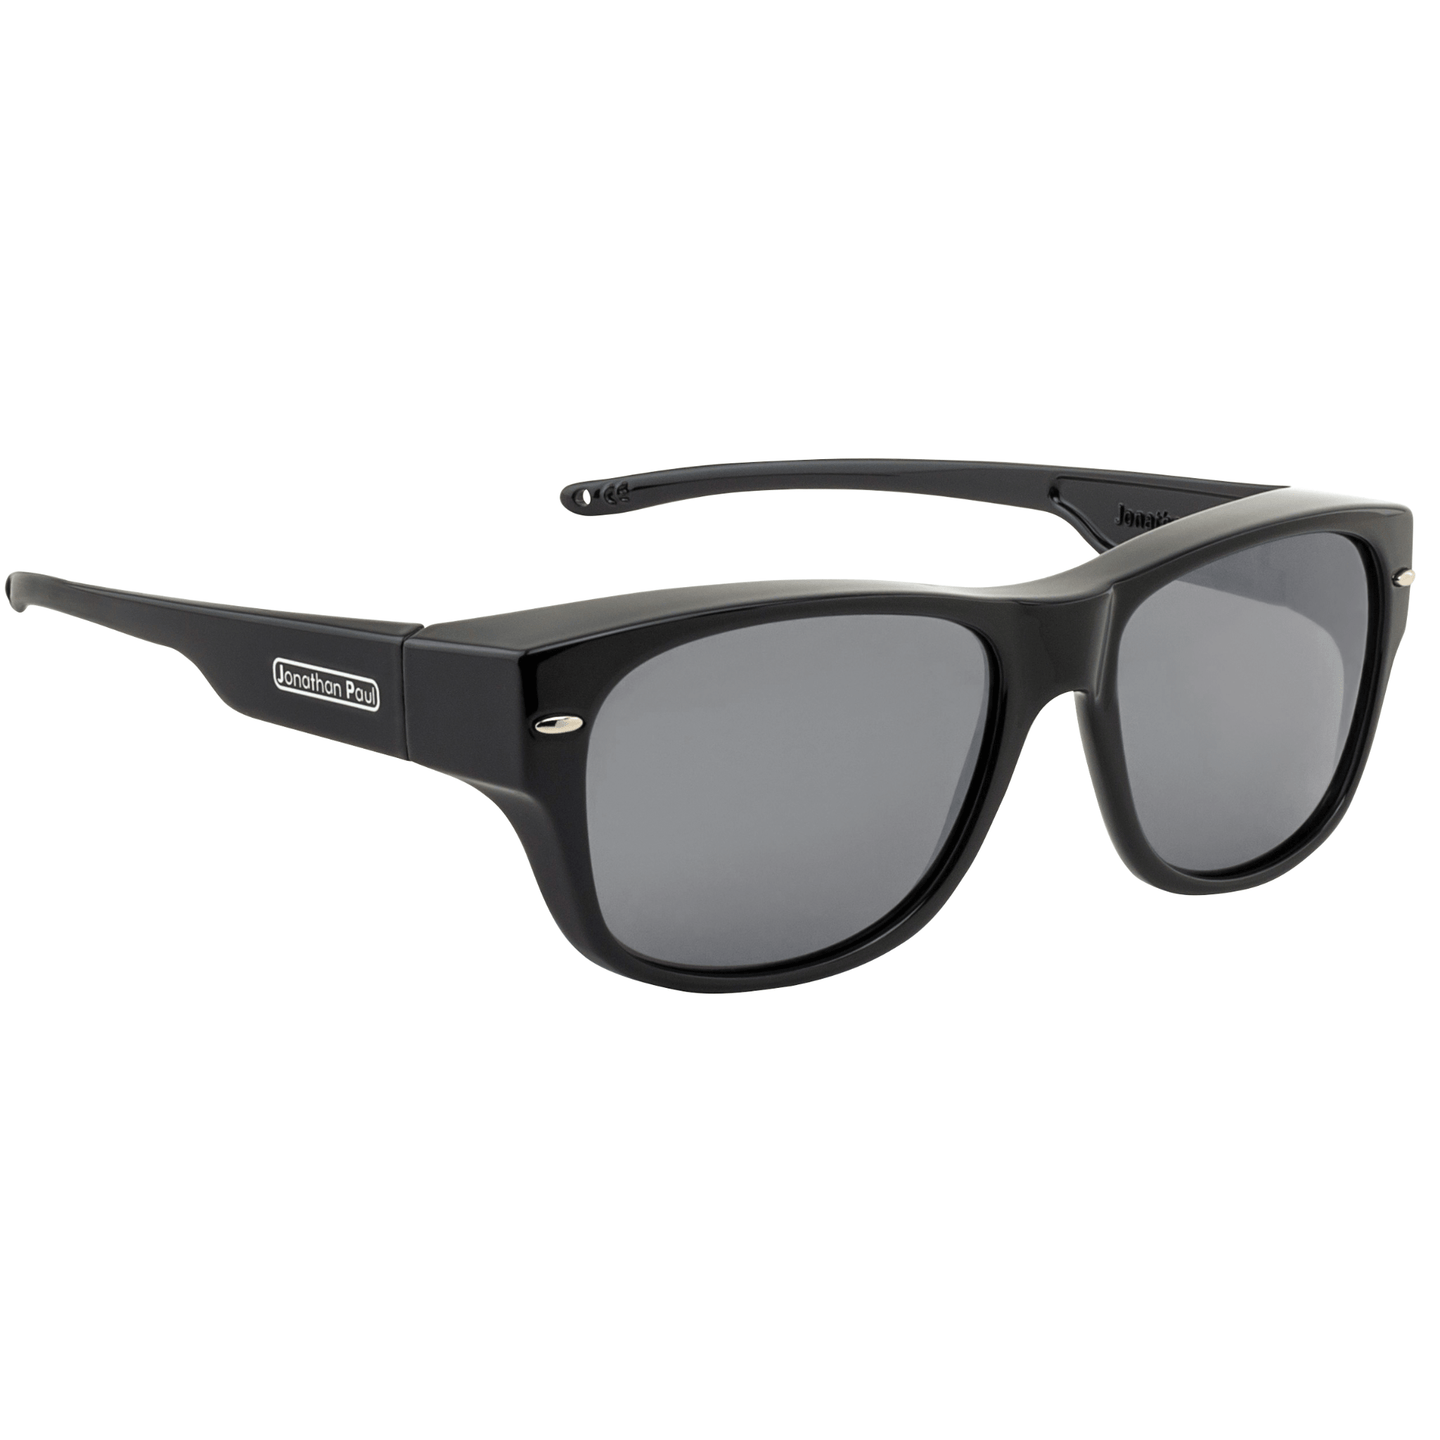 Fitover Sunglasses 'Cool Classic' Black - Grey Lens